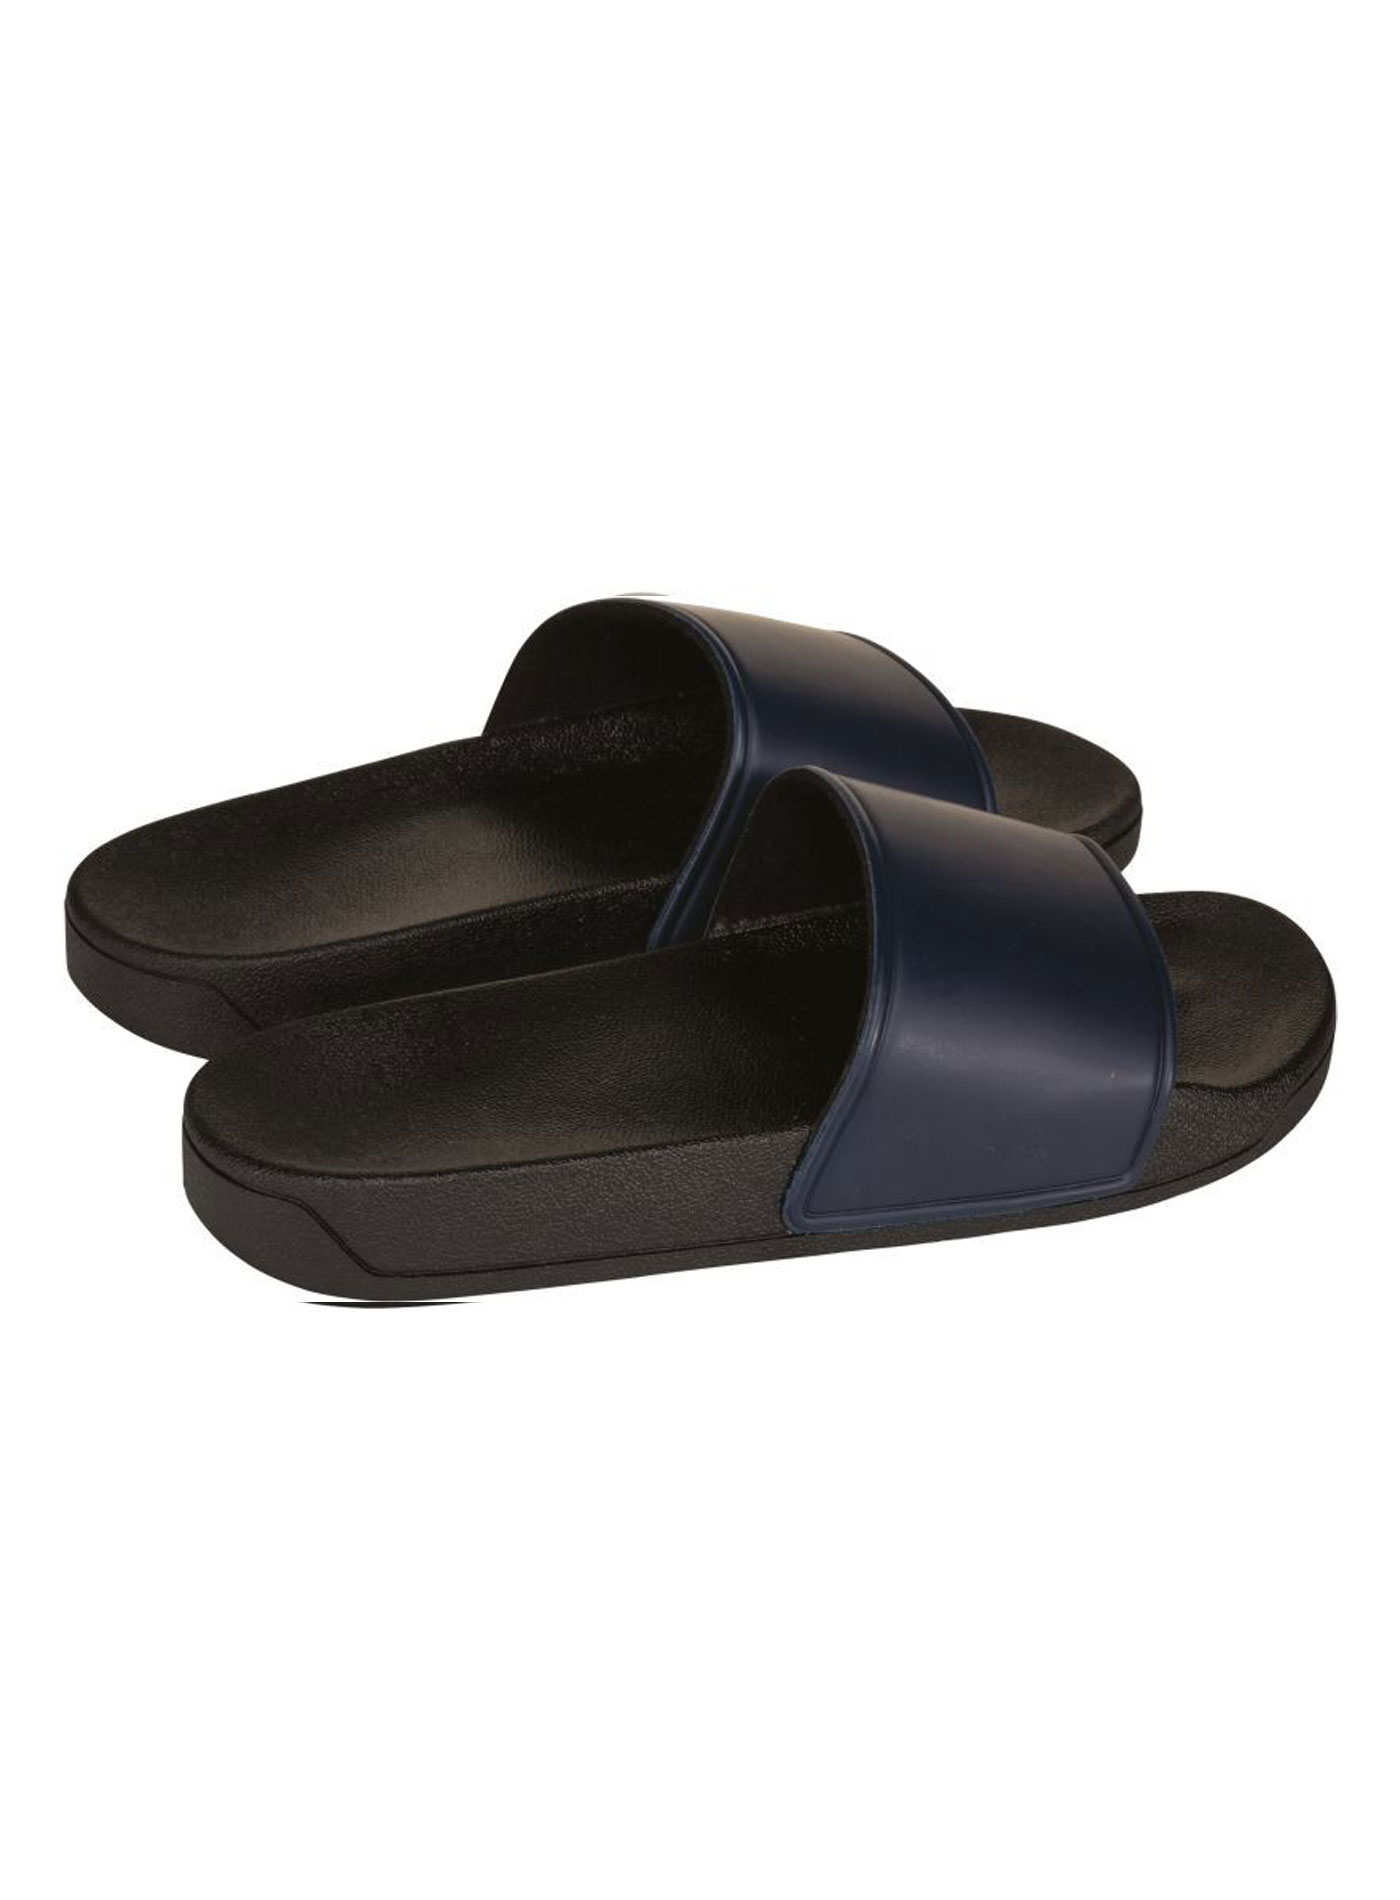 Pantofle Proact - Modrá s černou 39